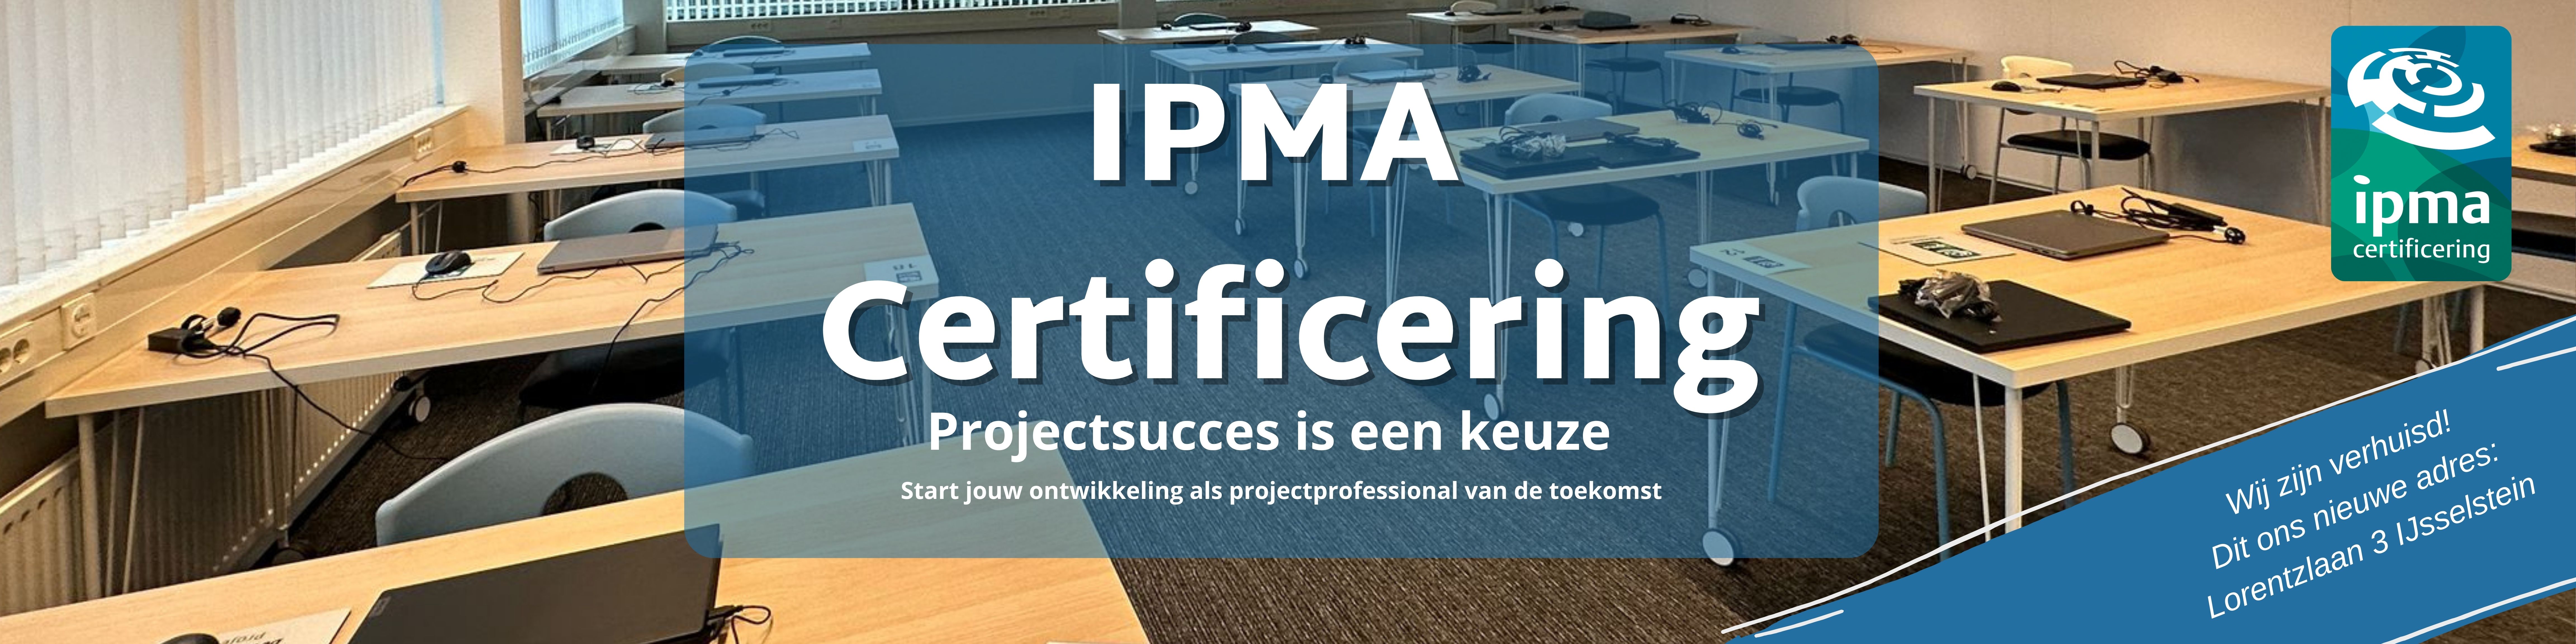 IPMA Certificering